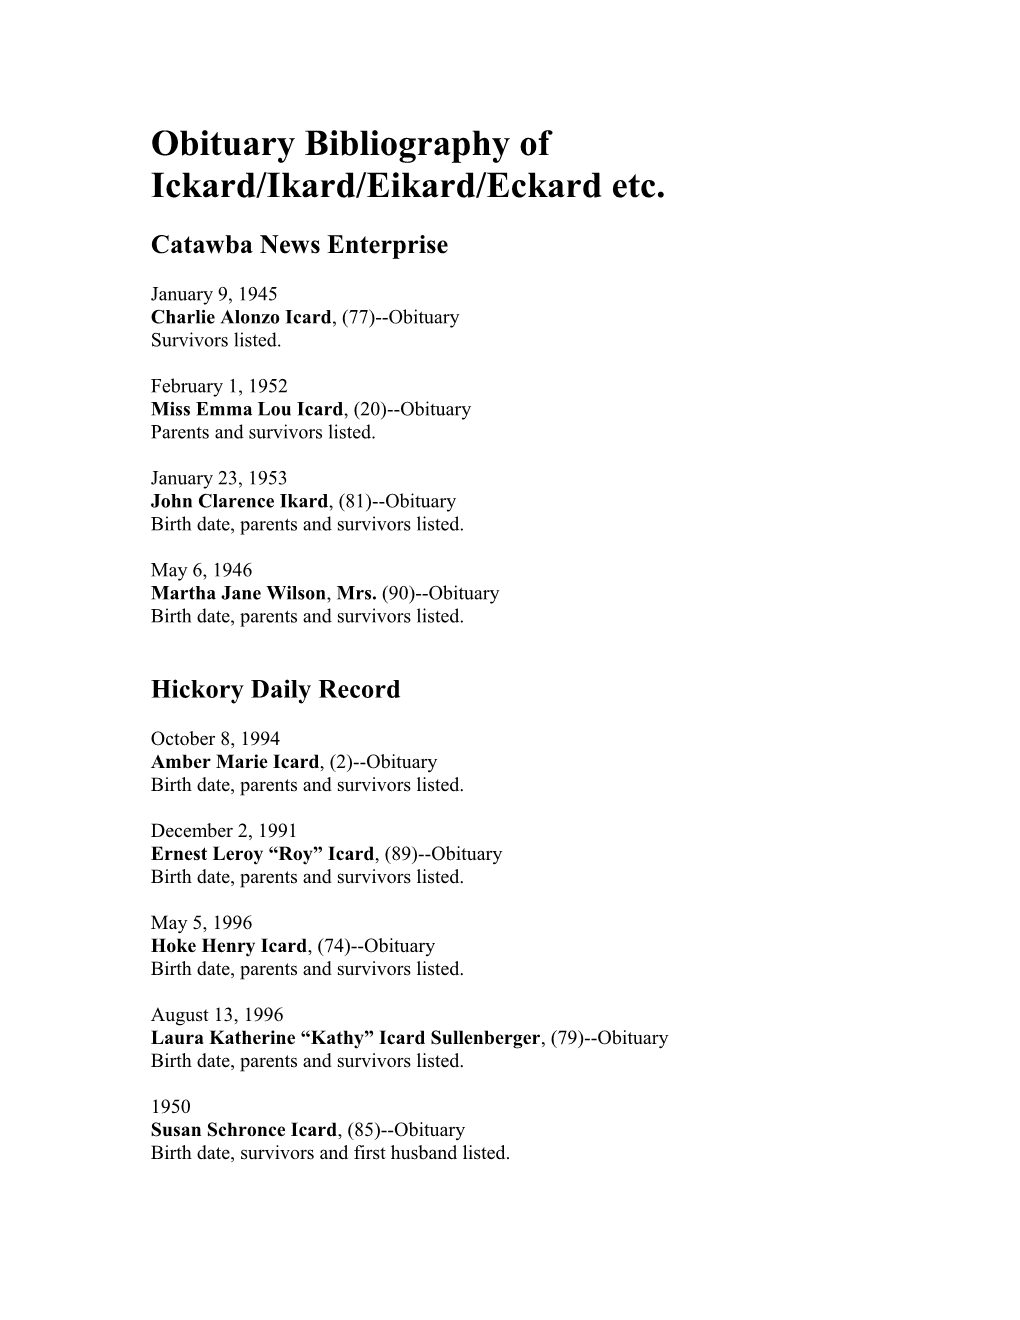 Obituary Bibliography of Ickard/Ikard/Eikard/Eckard Etc